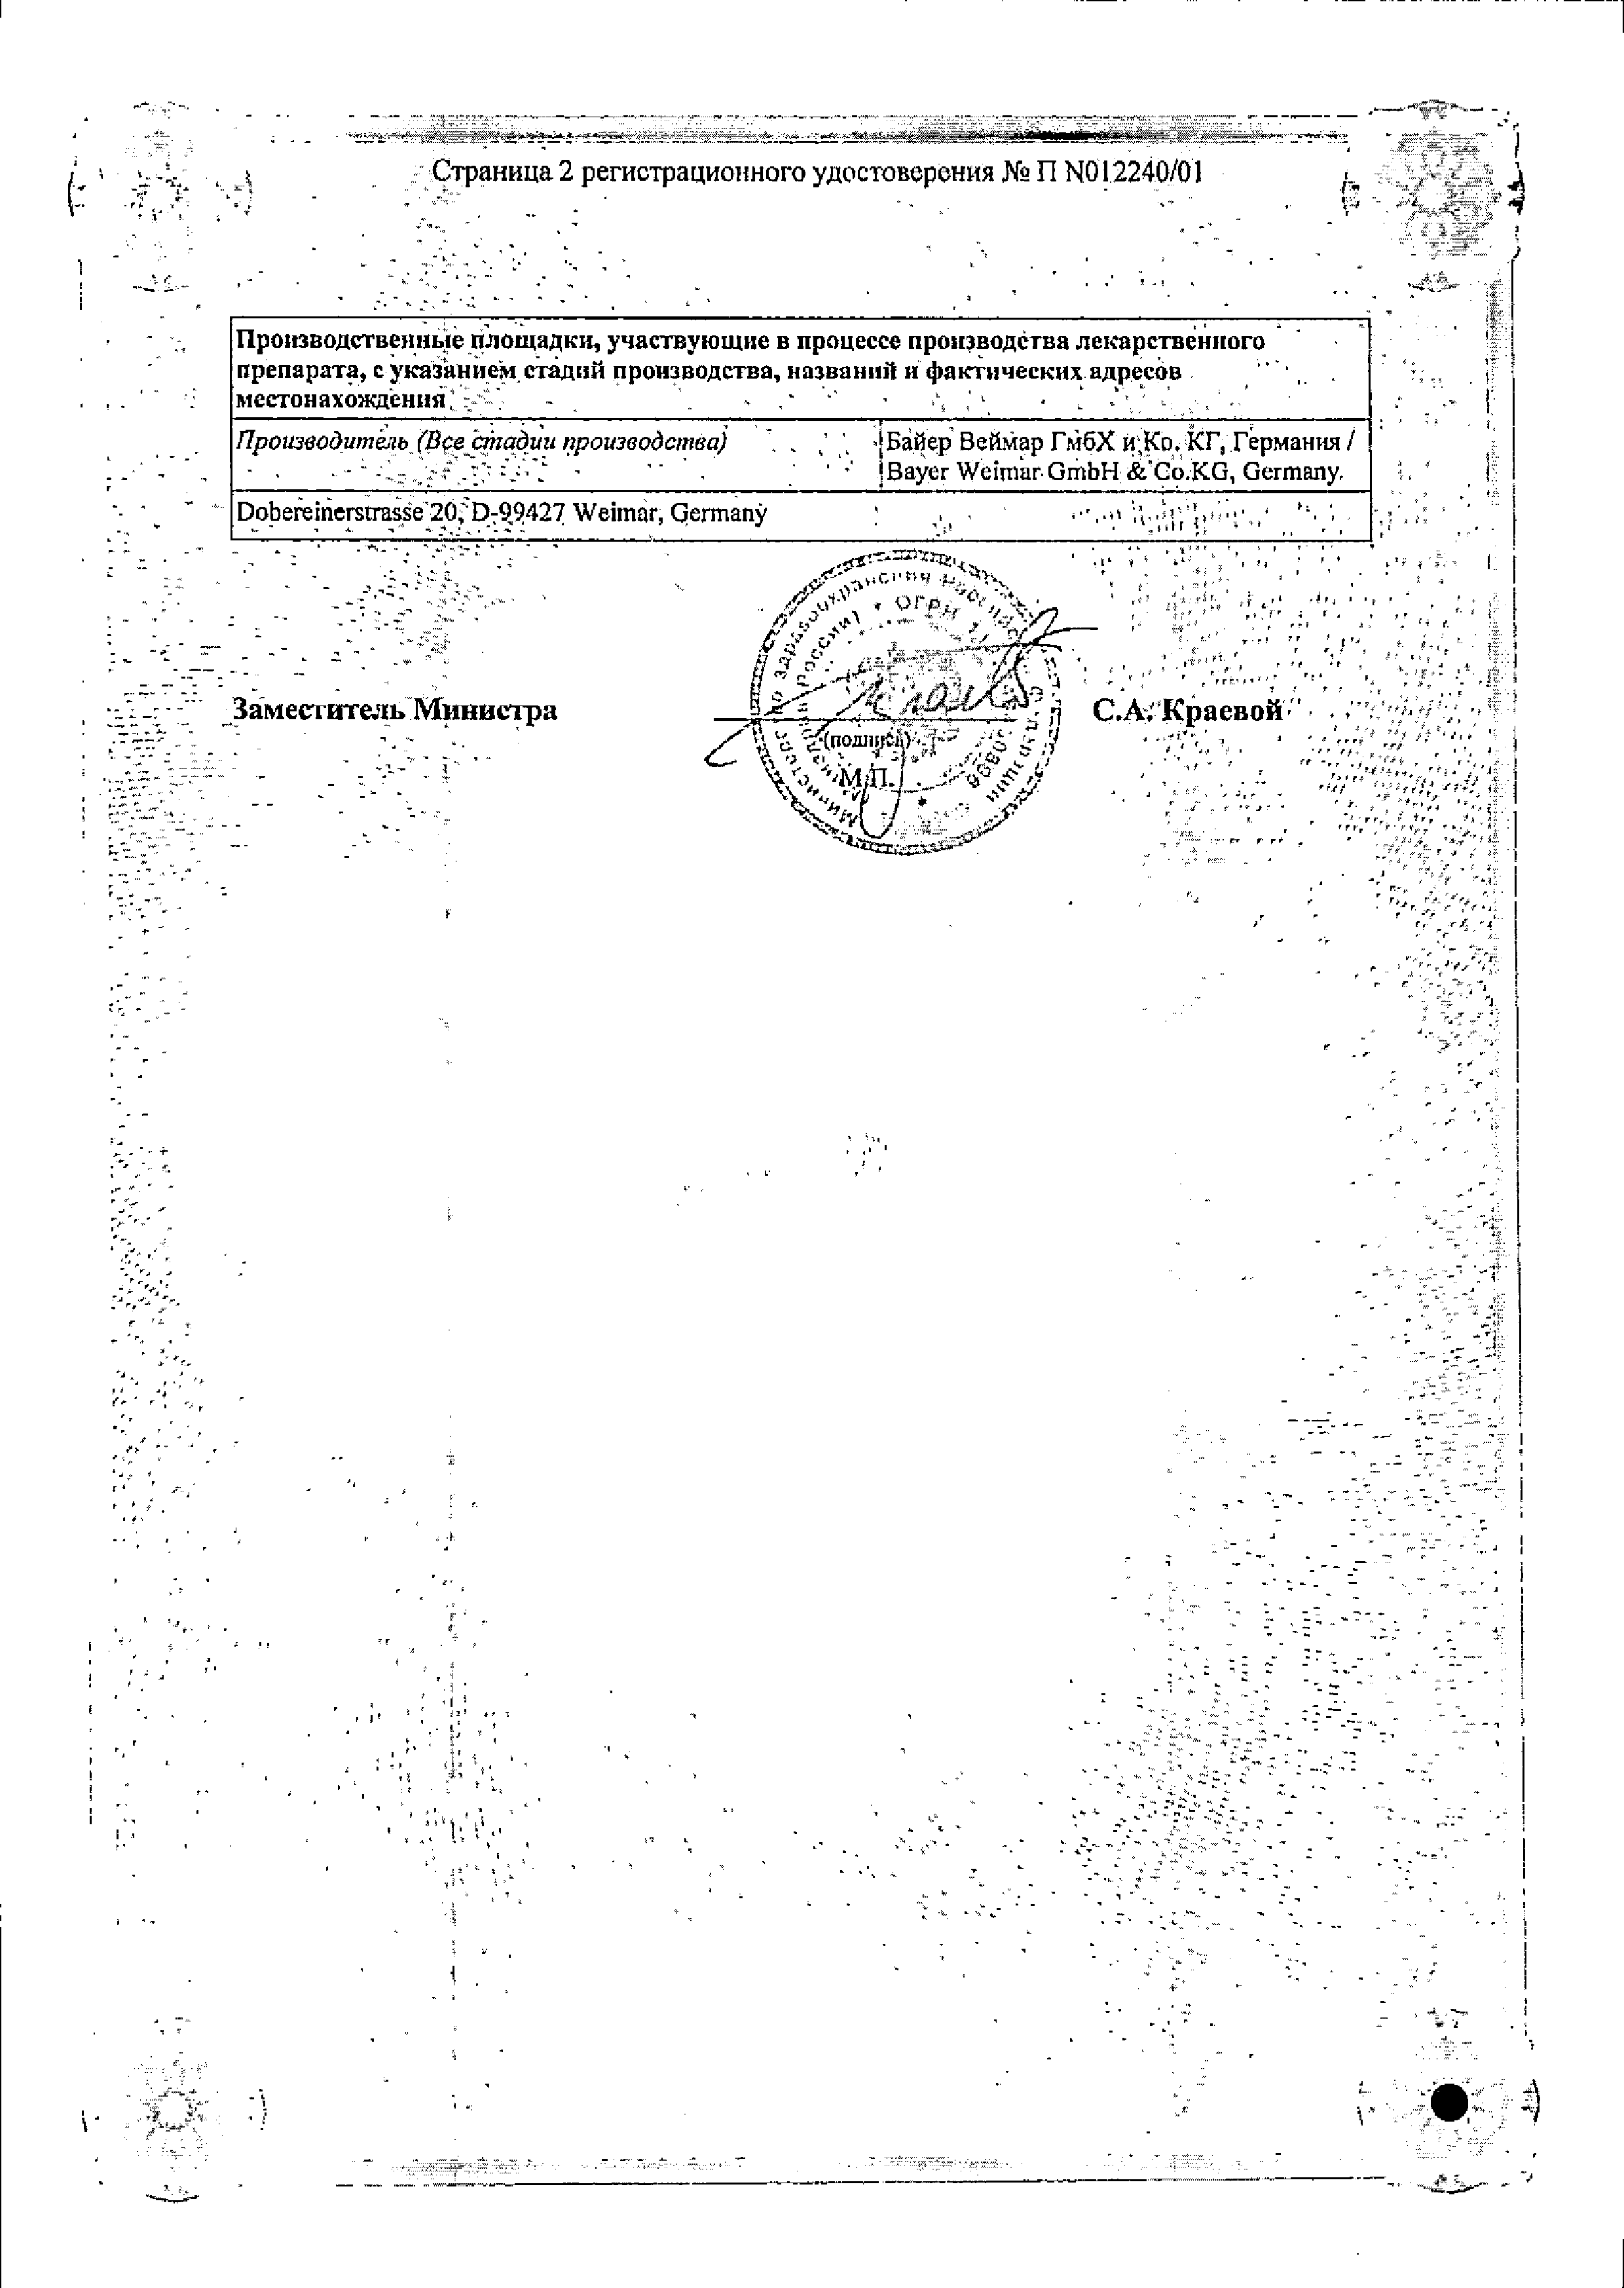 Диане-35 сертификат